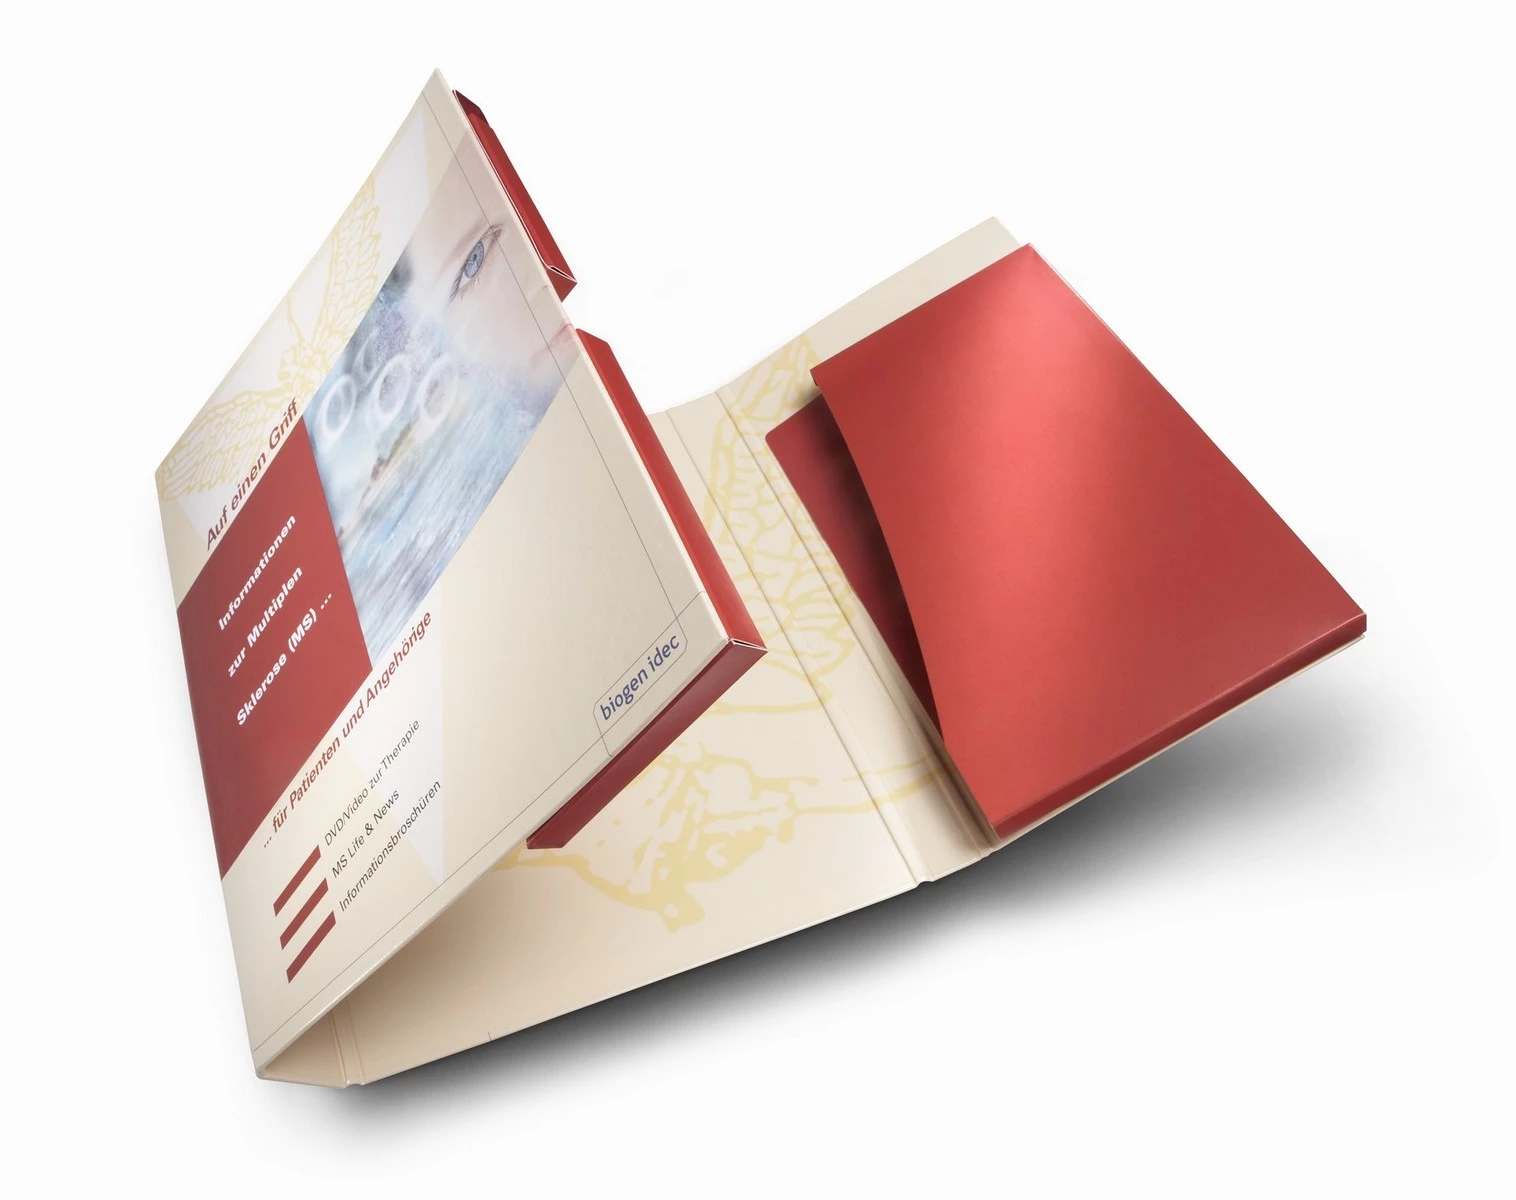 Musterbuch aus Karton bedruckt / Cardboard sample book printed